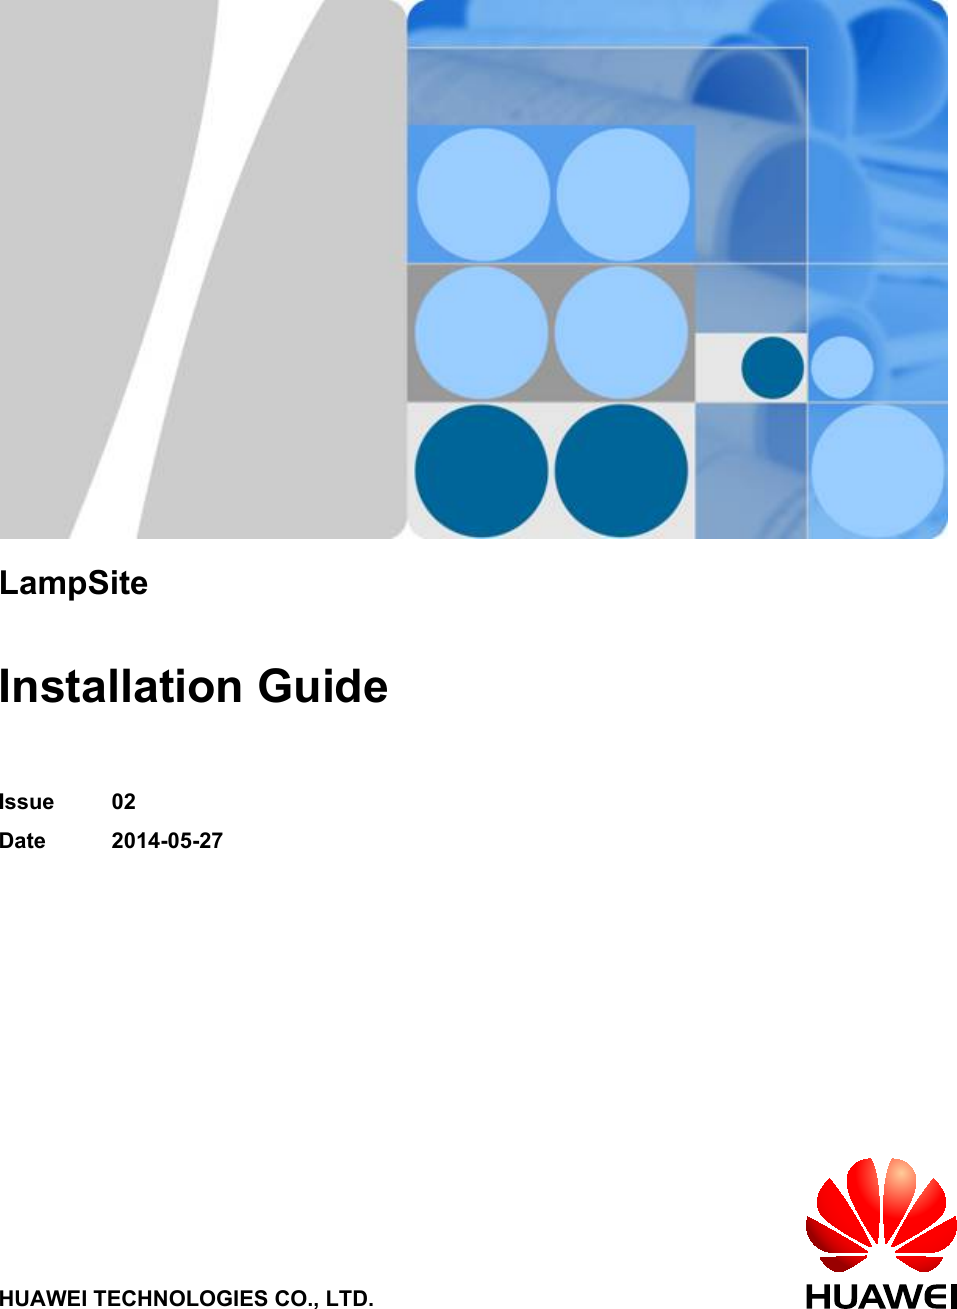 LampSiteInstallation GuideIssue 02Date 2014-05-27HUAWEI TECHNOLOGIES CO., LTD.